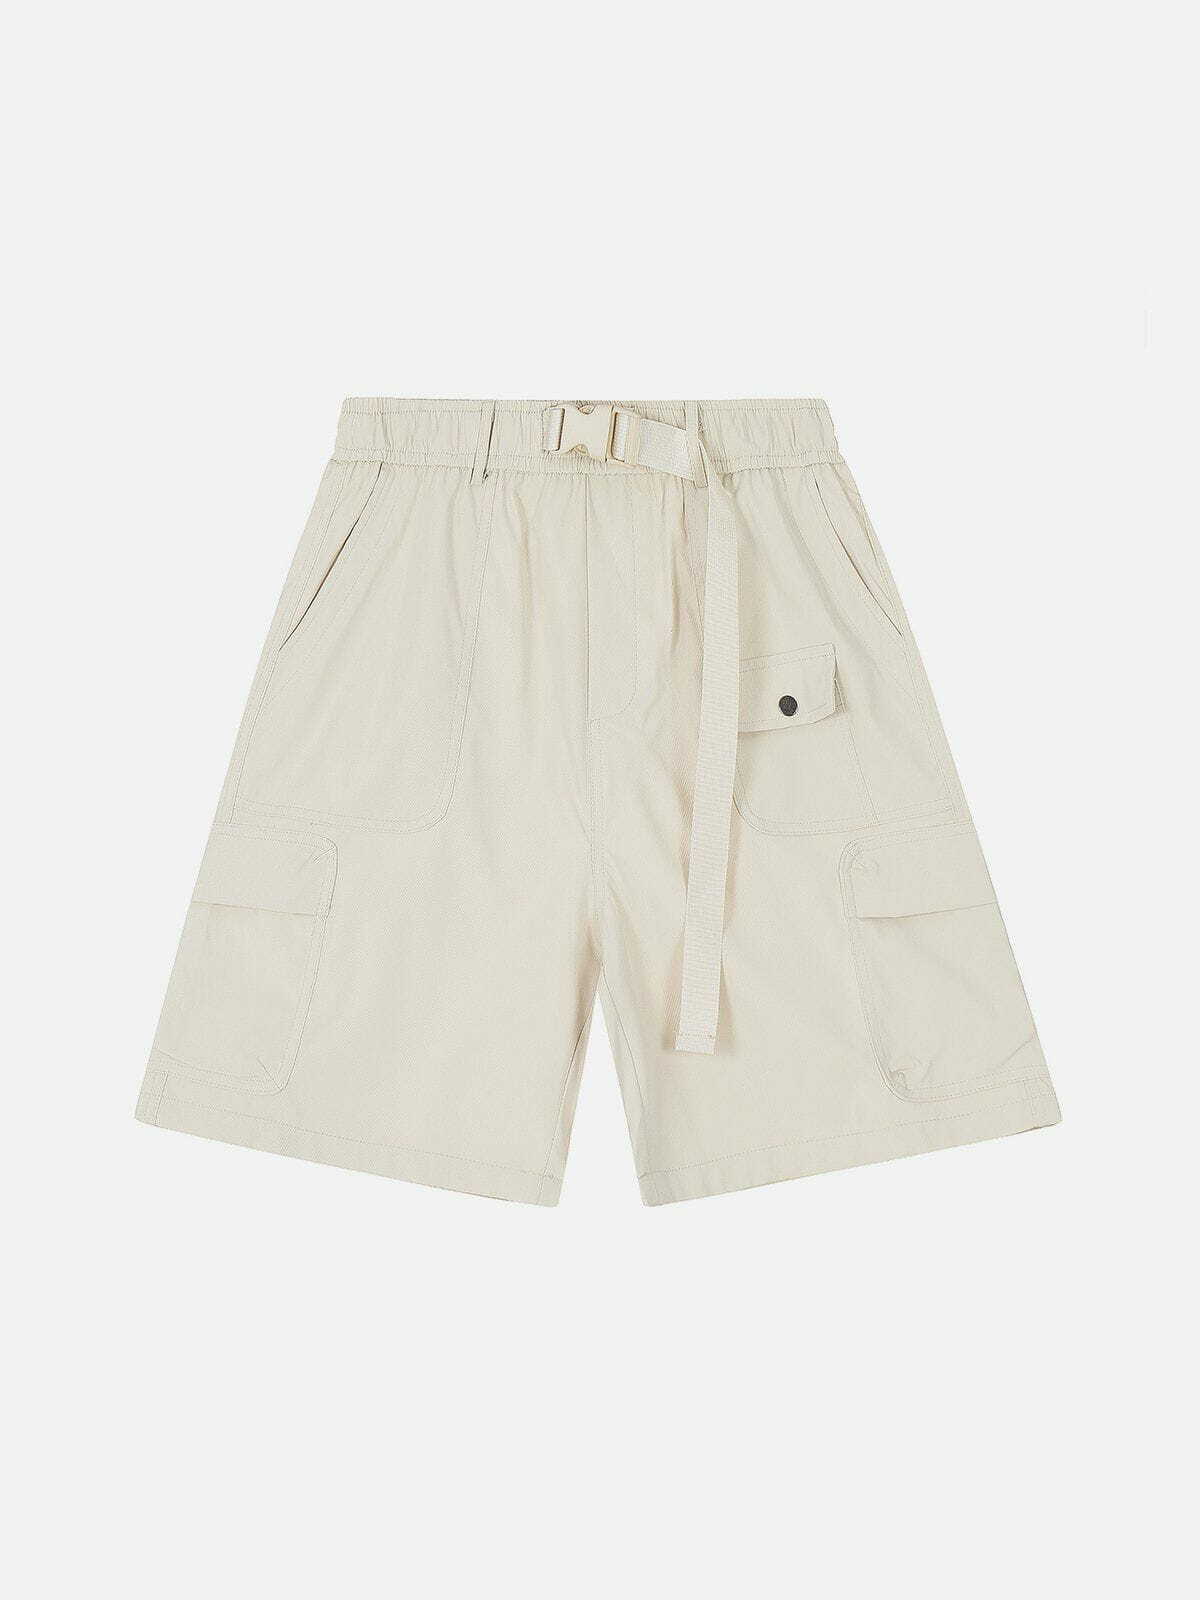 youthful solid belt shorts   sleek design & urban appeal 7519